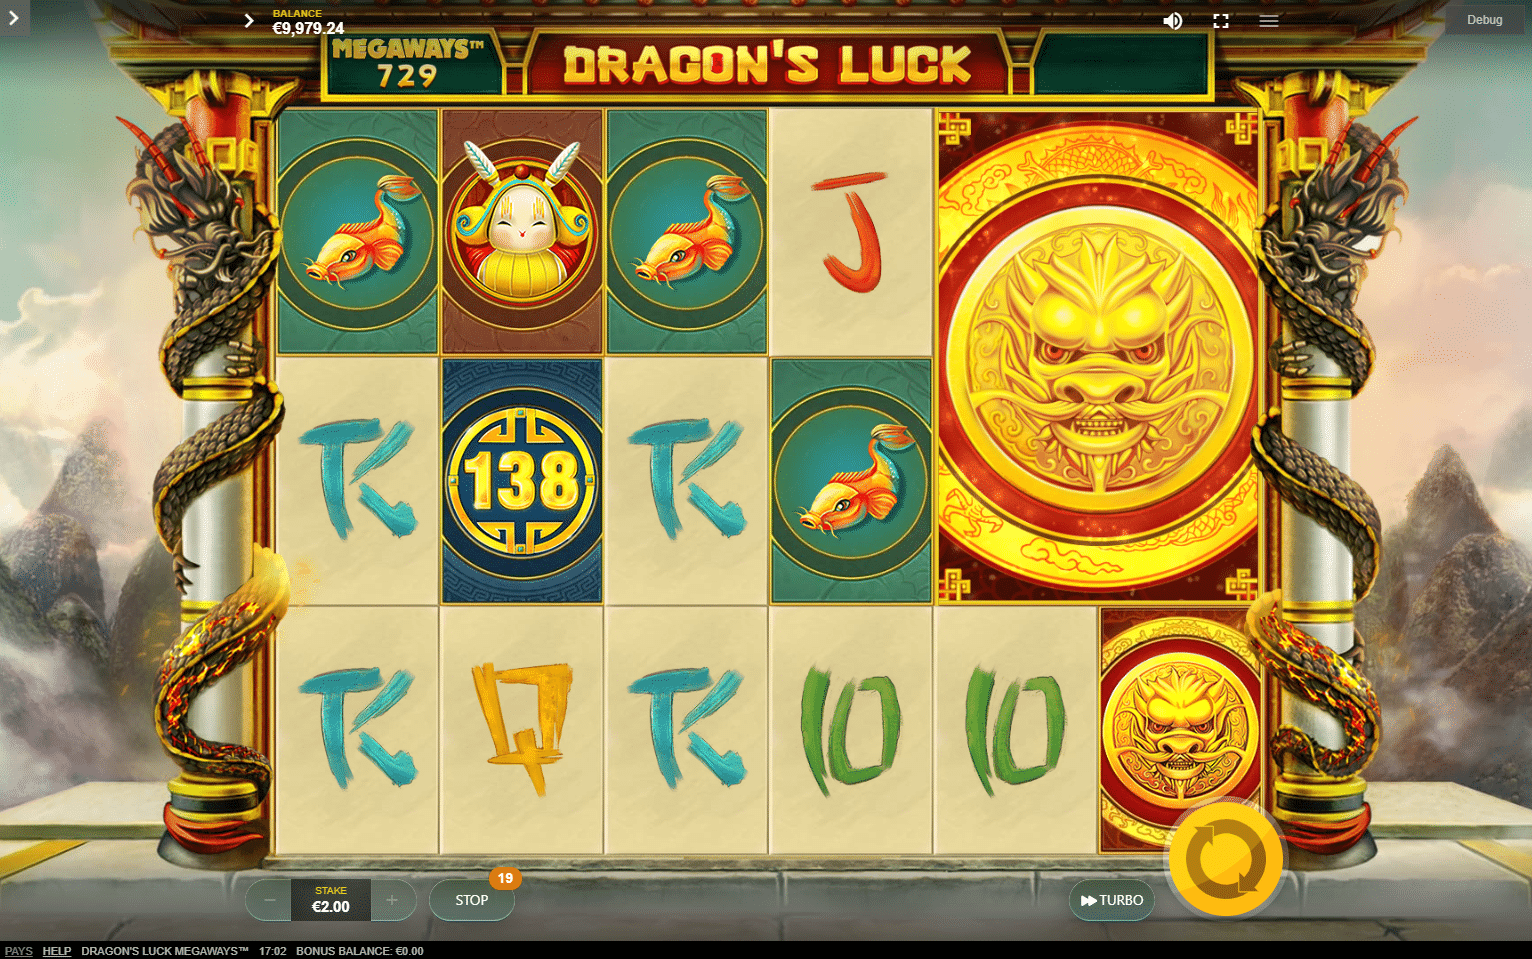 Dragons Luck Megaways gameplay screenshot